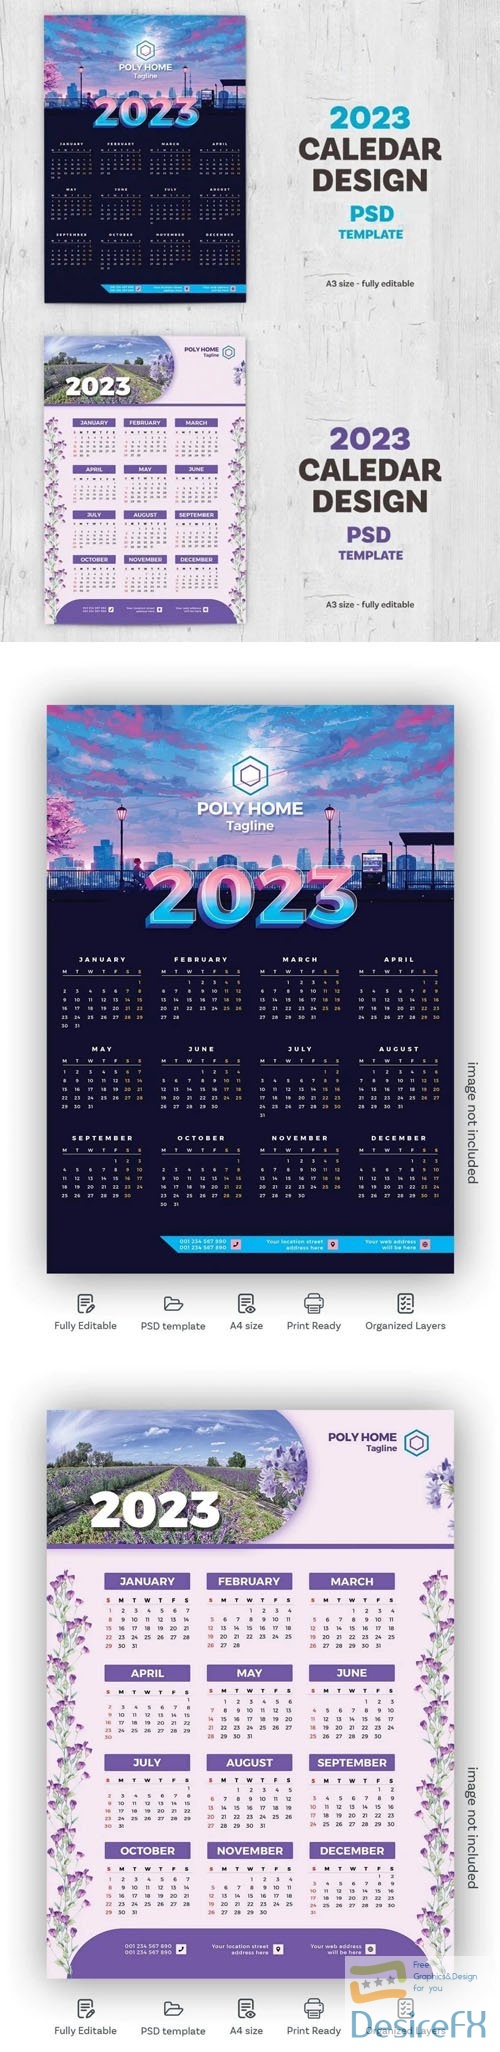 Two Wall Calendar 2023 PSD Templates